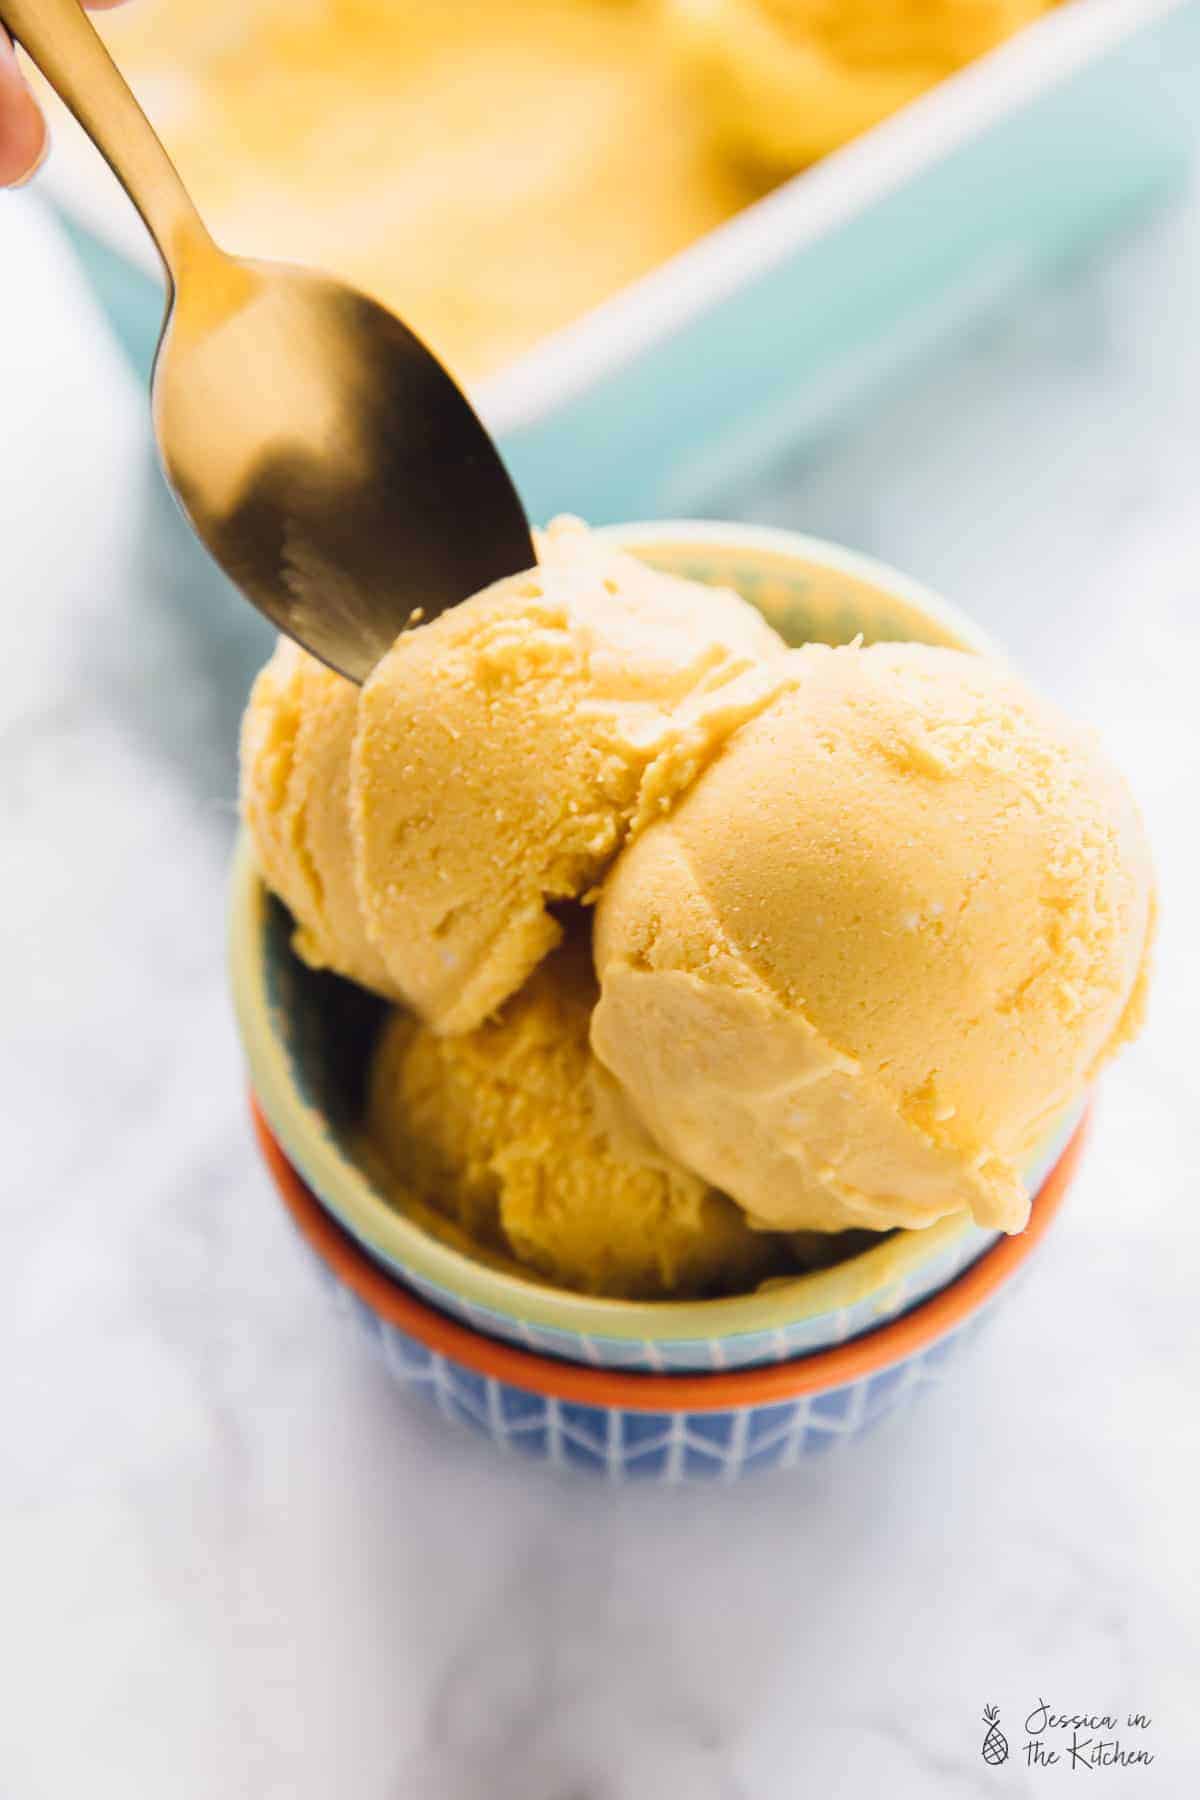 Spoon digging into scoops of vegan mango ice cream in bowl